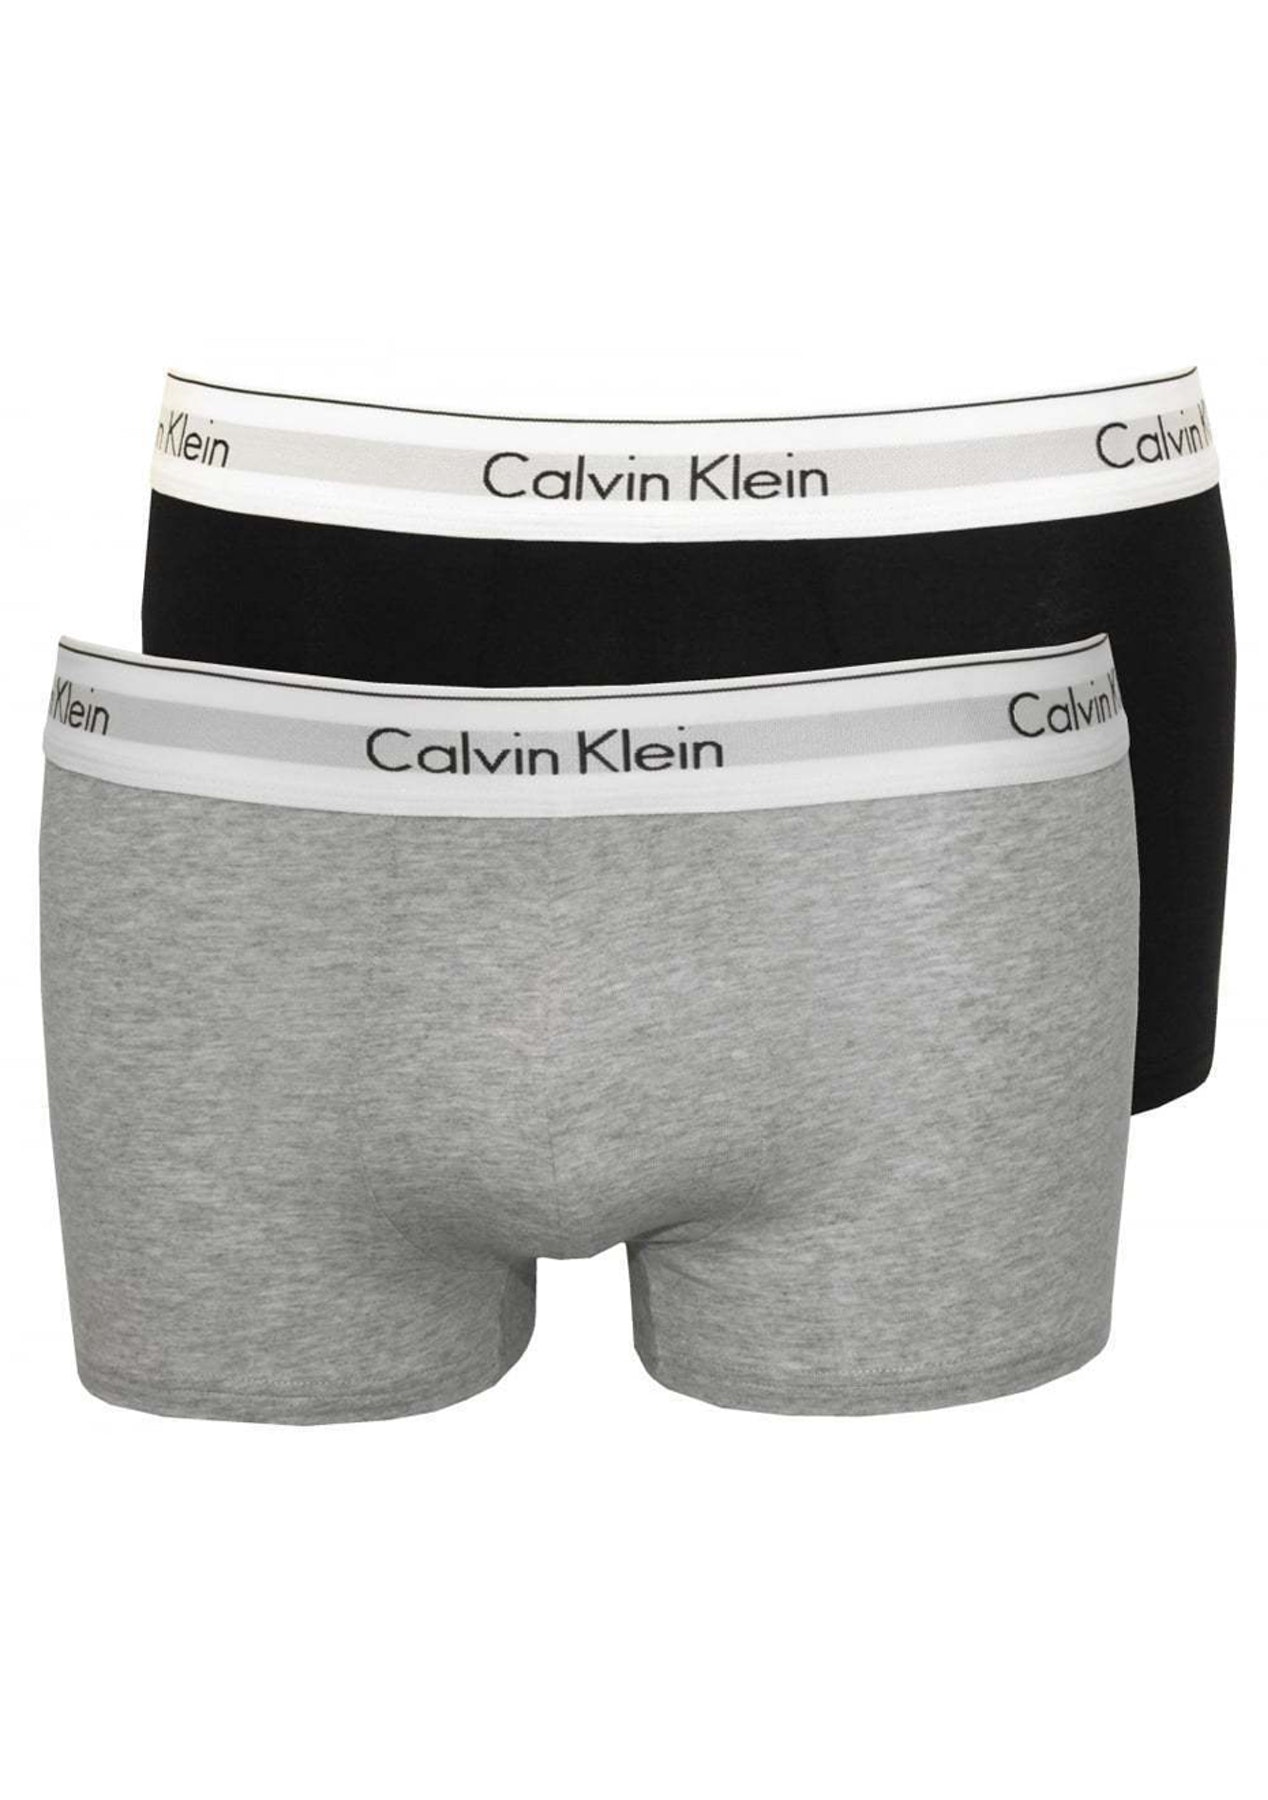 calvin klein modern cotton trunks